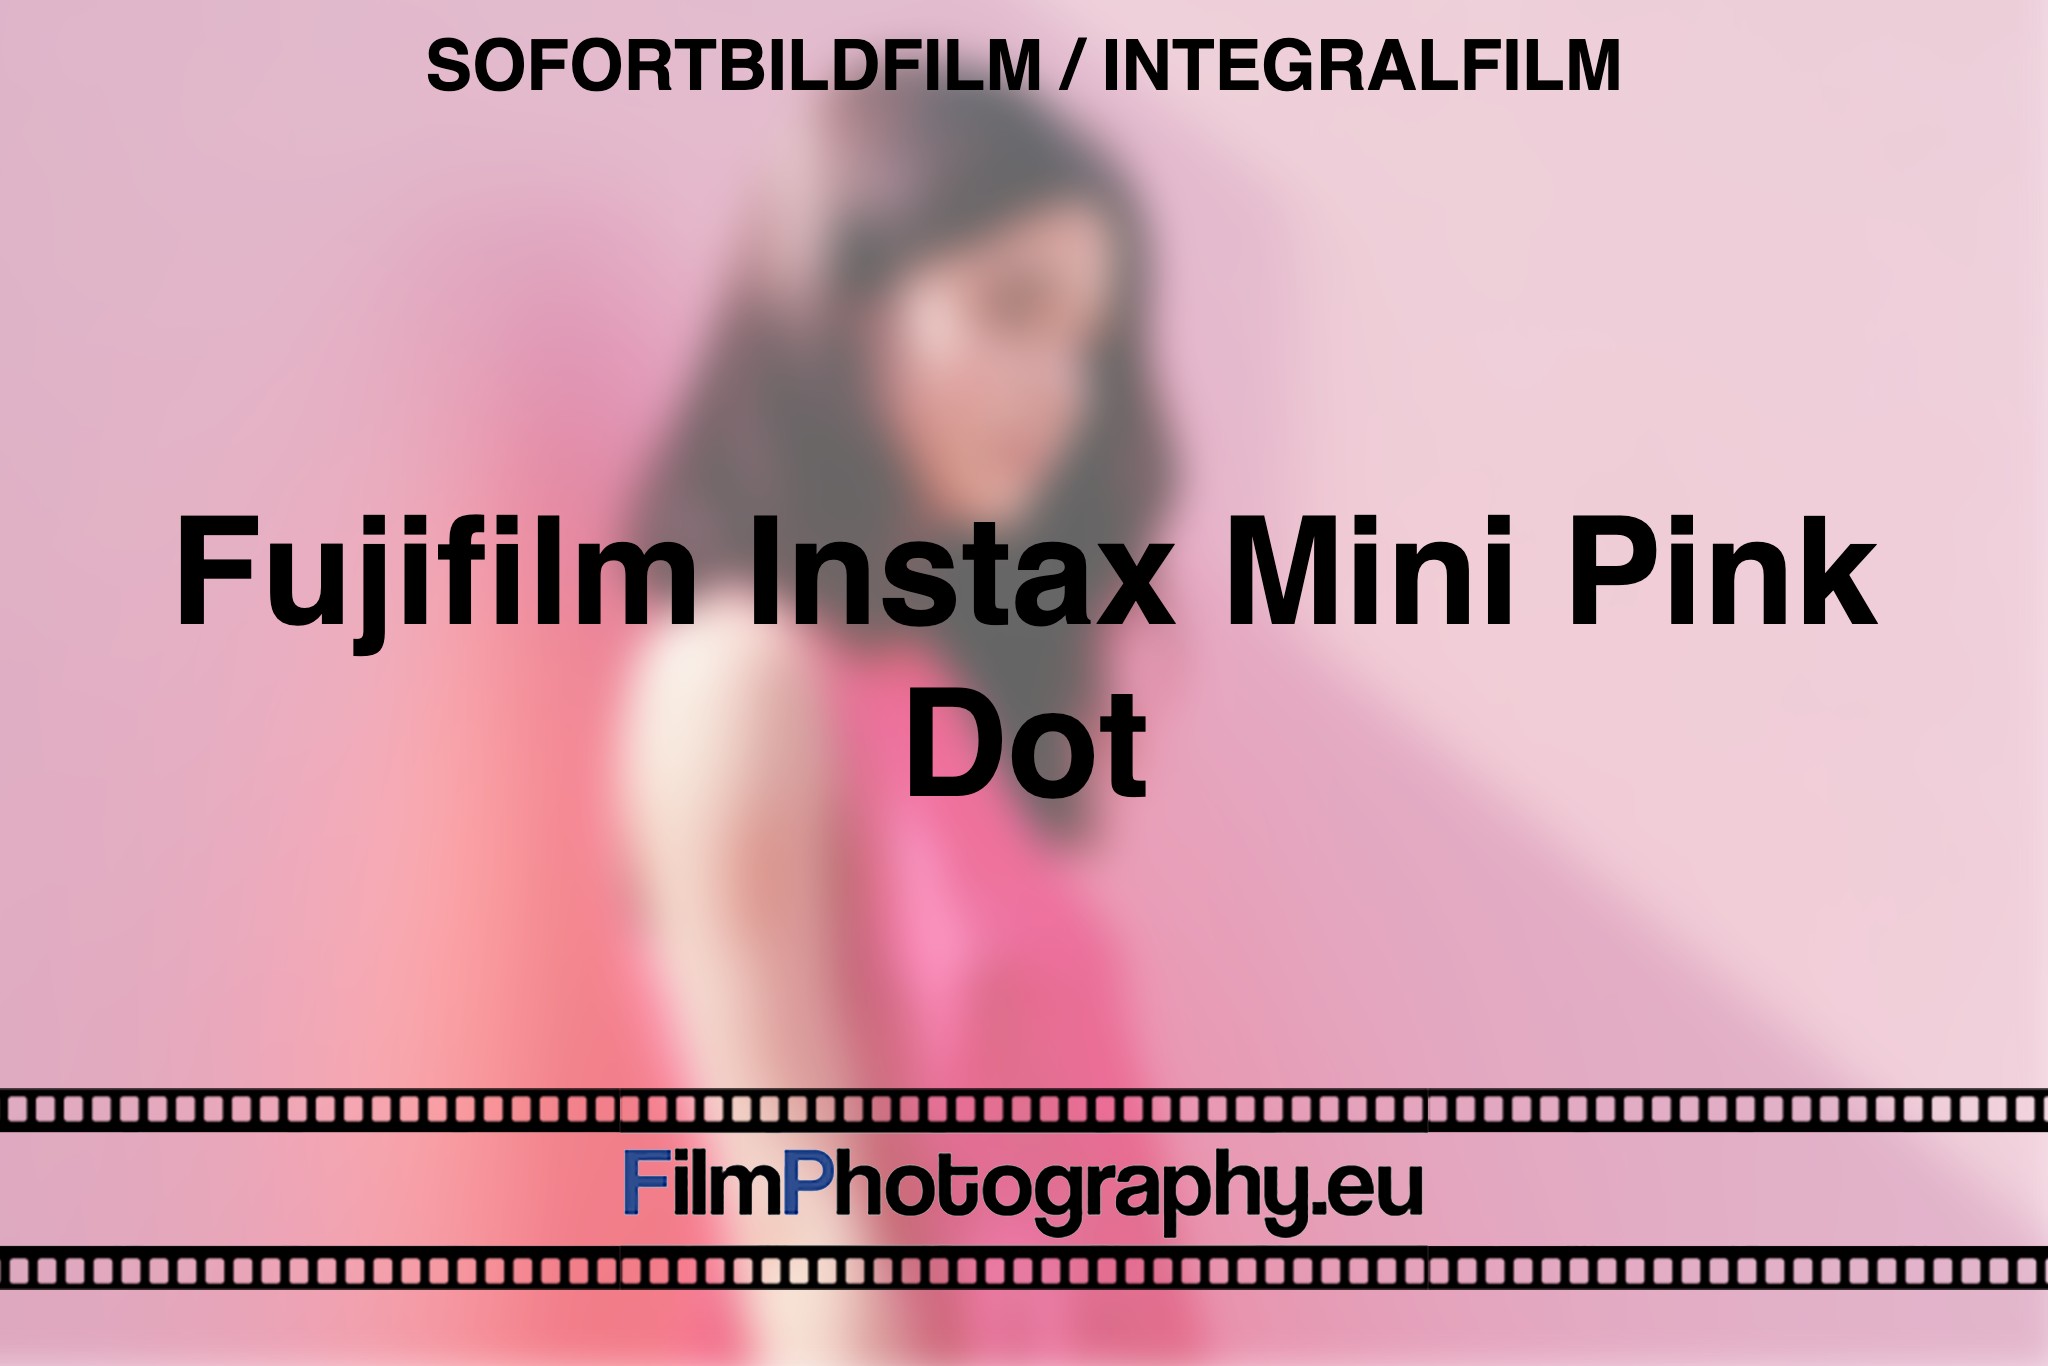 fujifilm-instax-mini-pink-dot-sofortbildfilm-integralfilm-fp-bnv